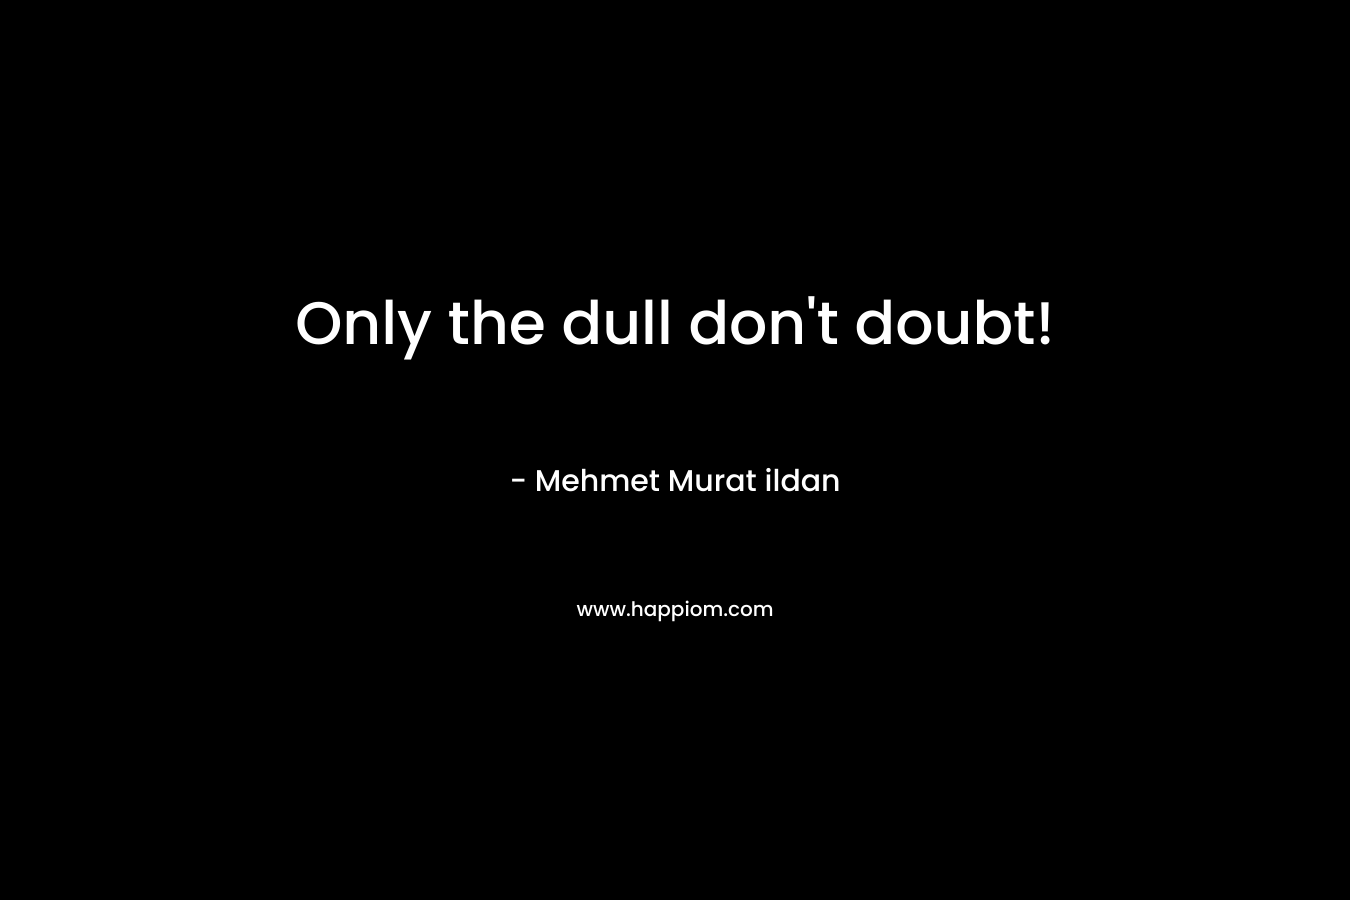 Only the dull don’t doubt! – Mehmet Murat ildan